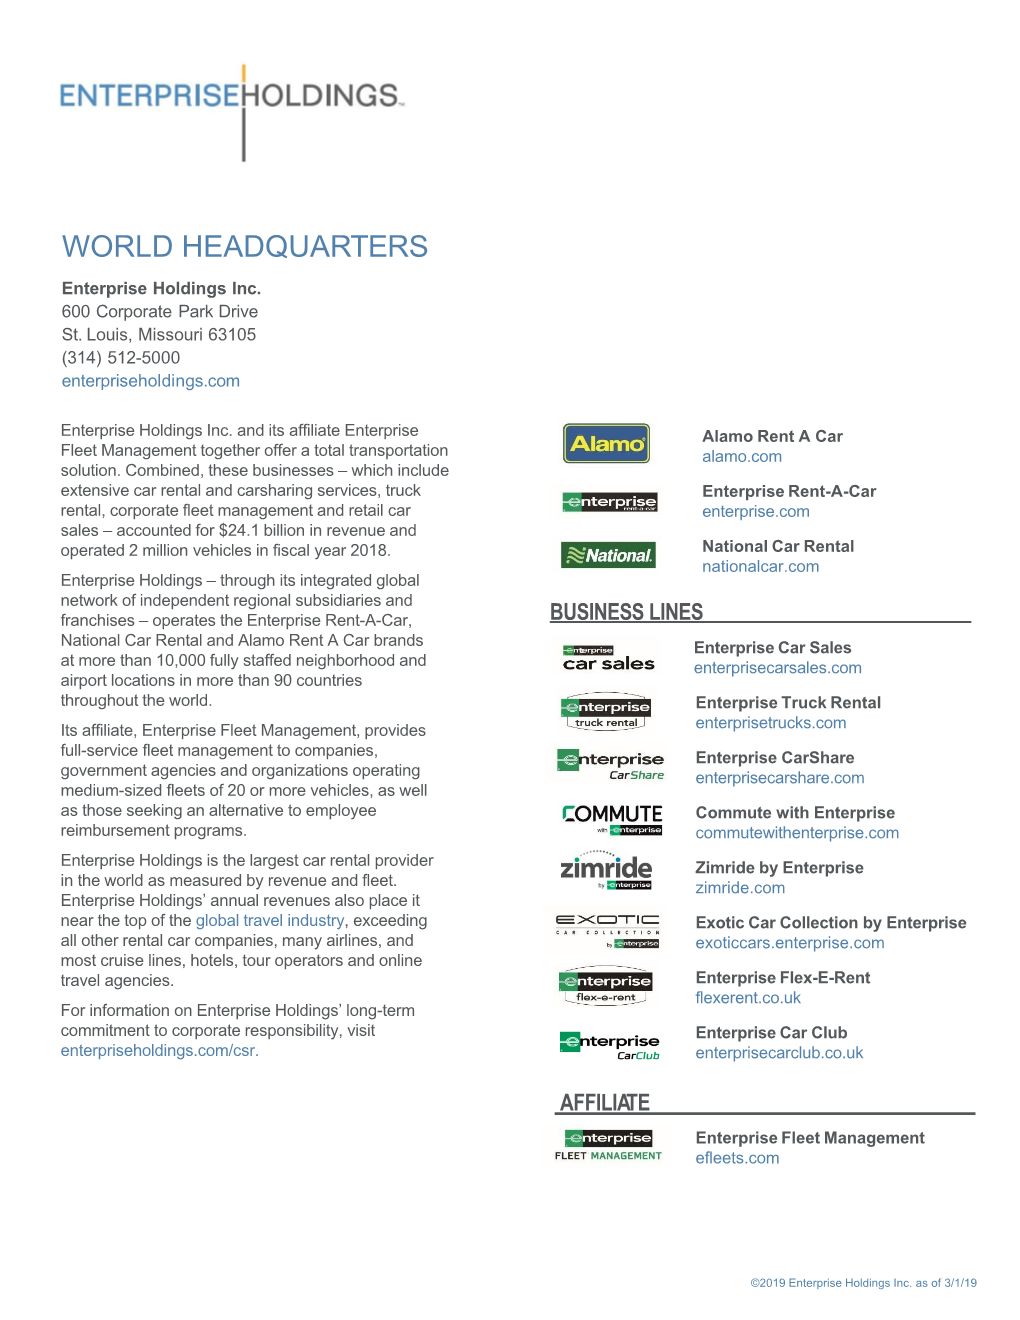 Enterprise Holdings Fact Sheet